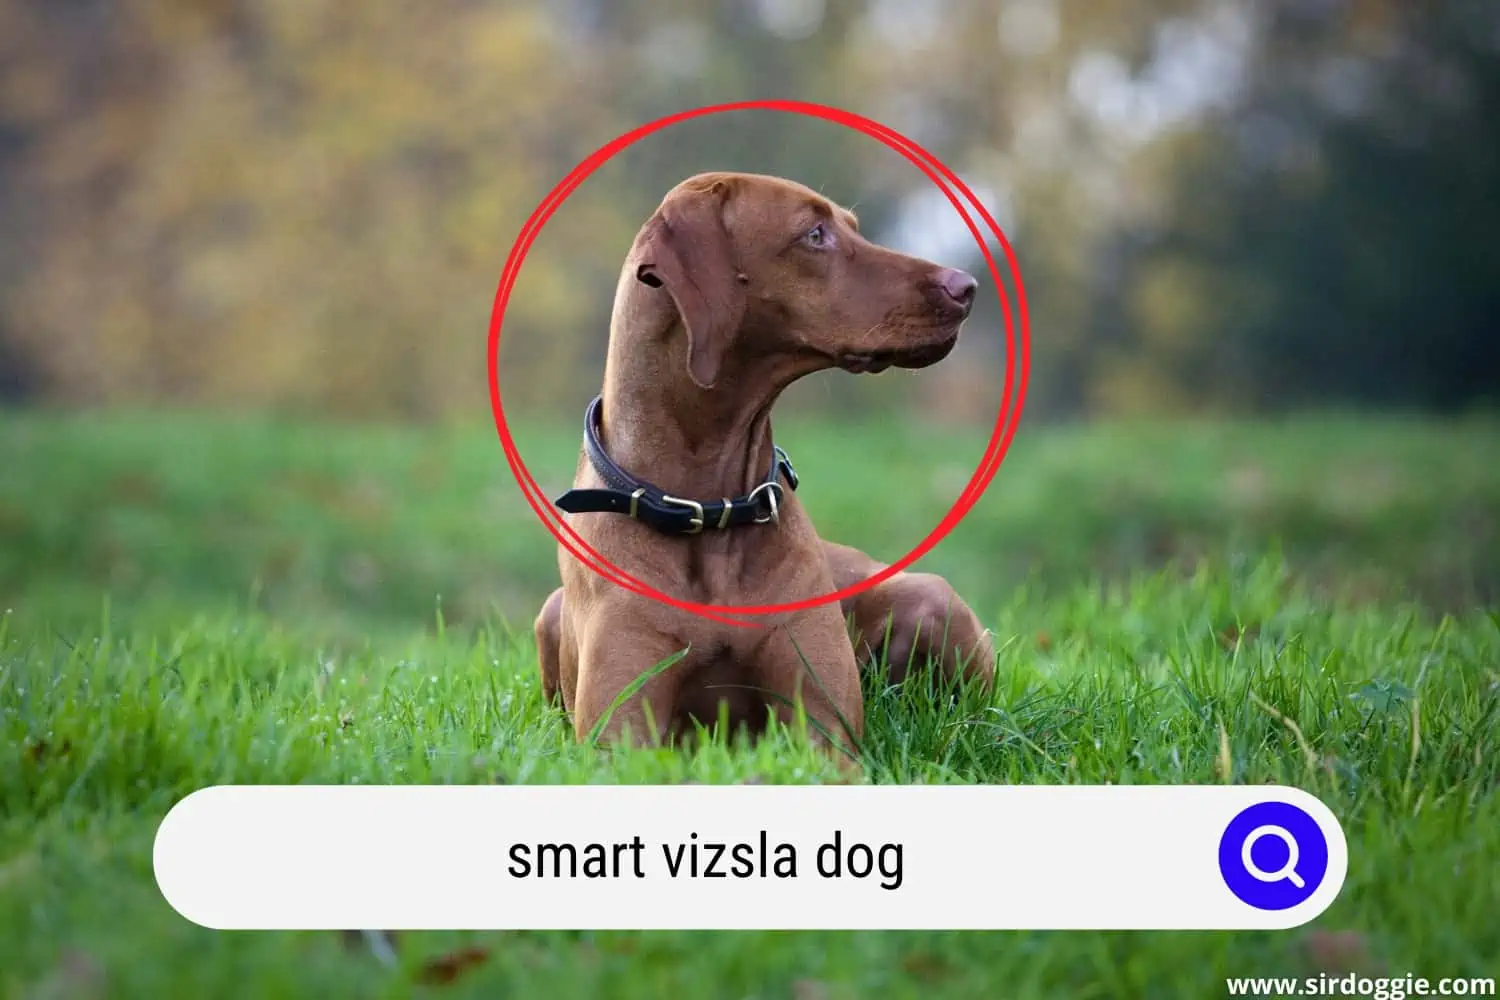 Vizsla dog looking on the side, wearing black collar